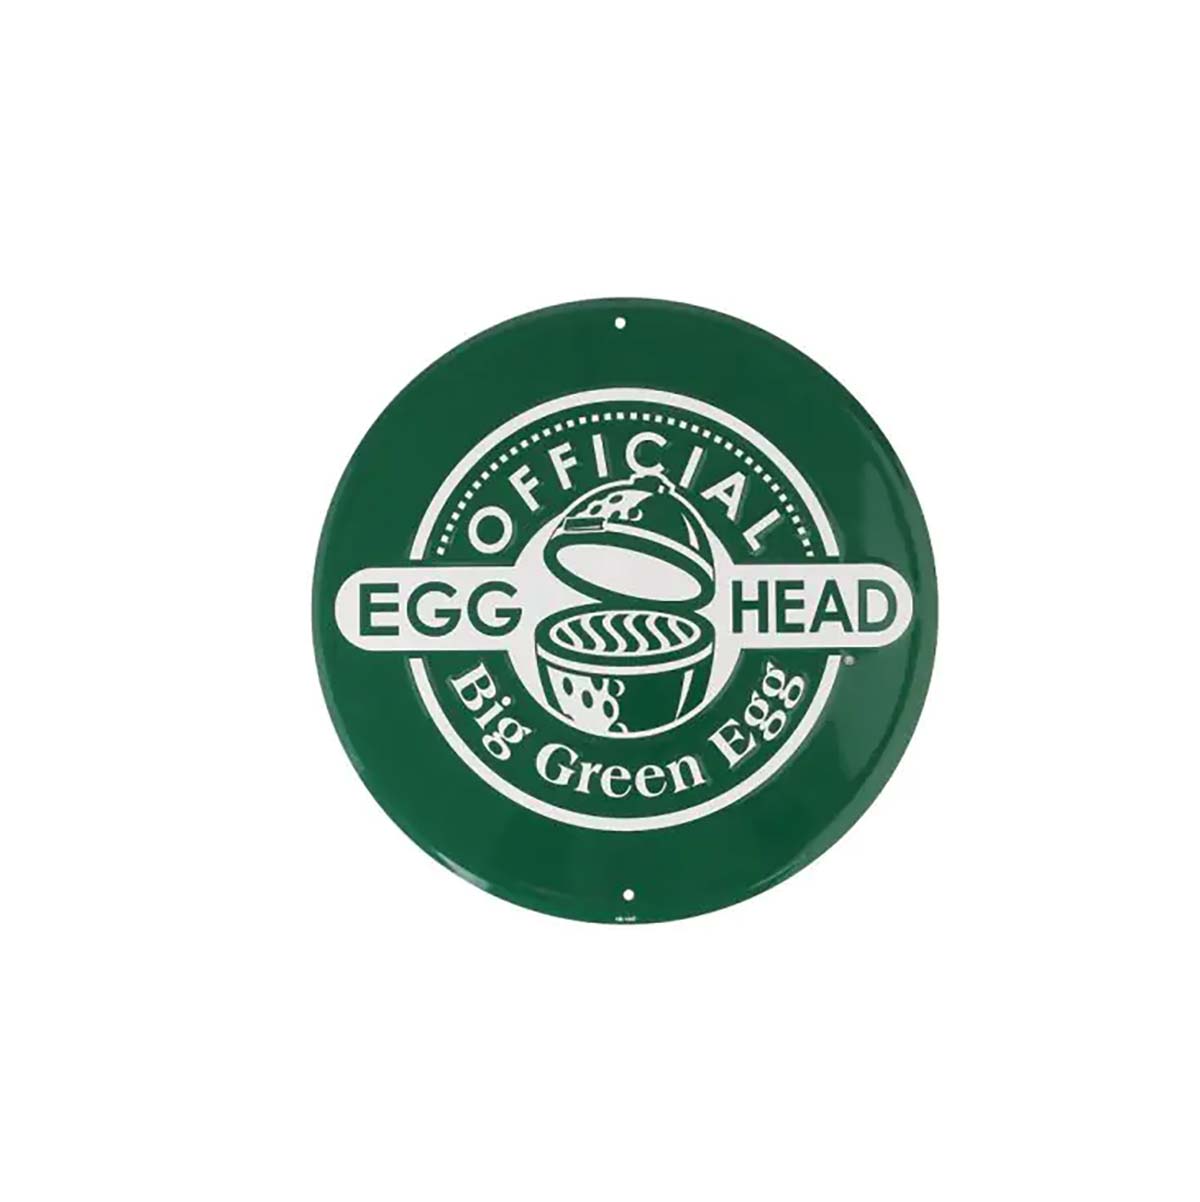 Big Green Egg | Official Egghead | Rundes grünes Dekoschild